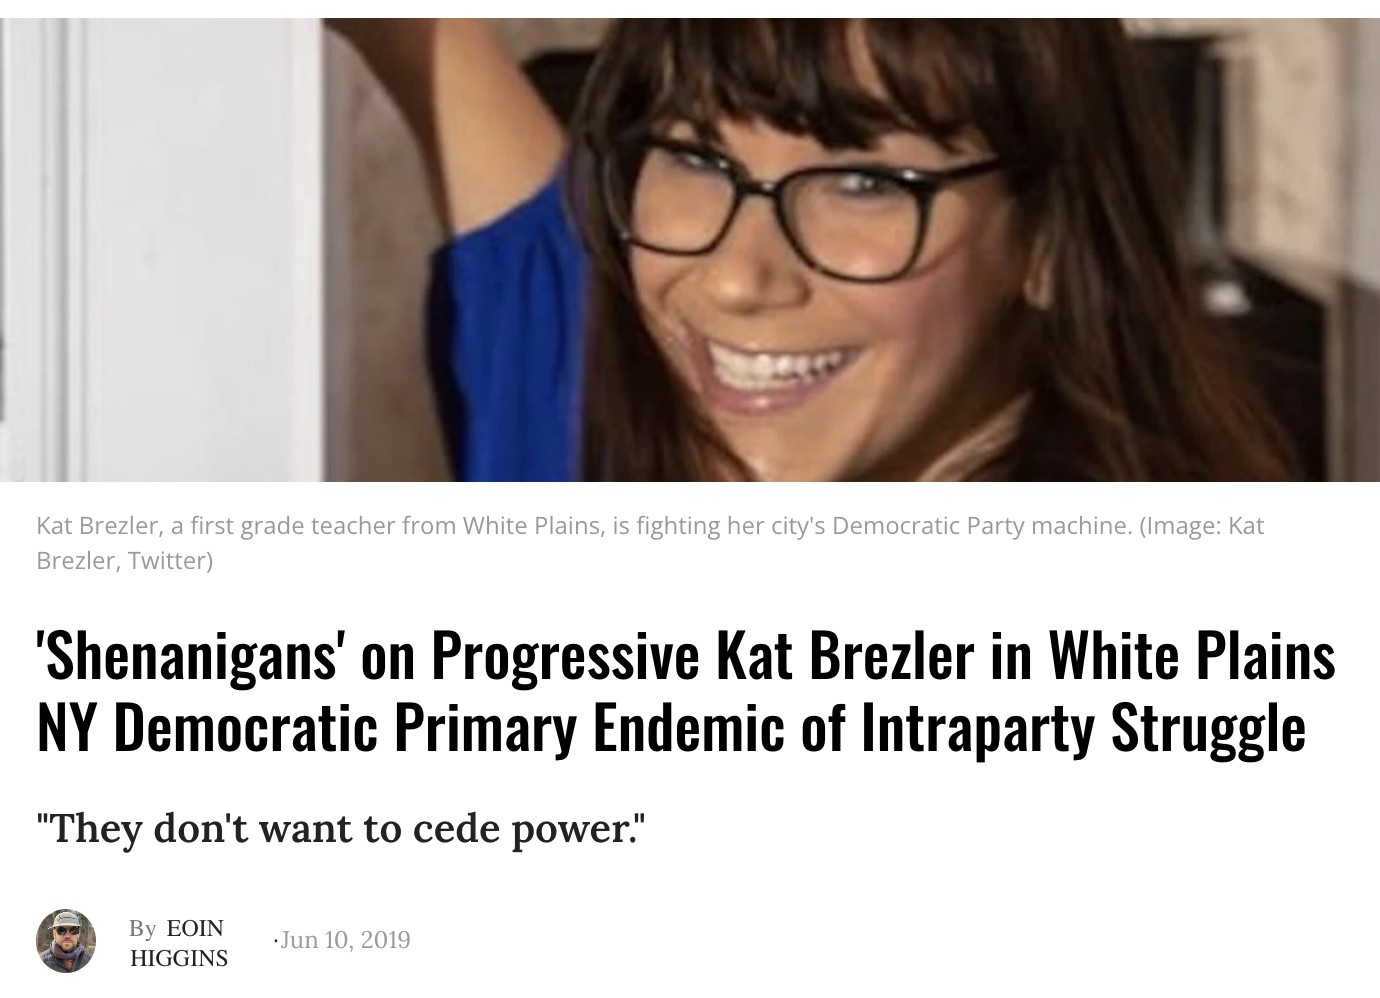 https://www.commondreams.org/news/2019/06/10/shenanigans-progressive-kat-brezler-white-plains-ny-democratic-primary-endemic